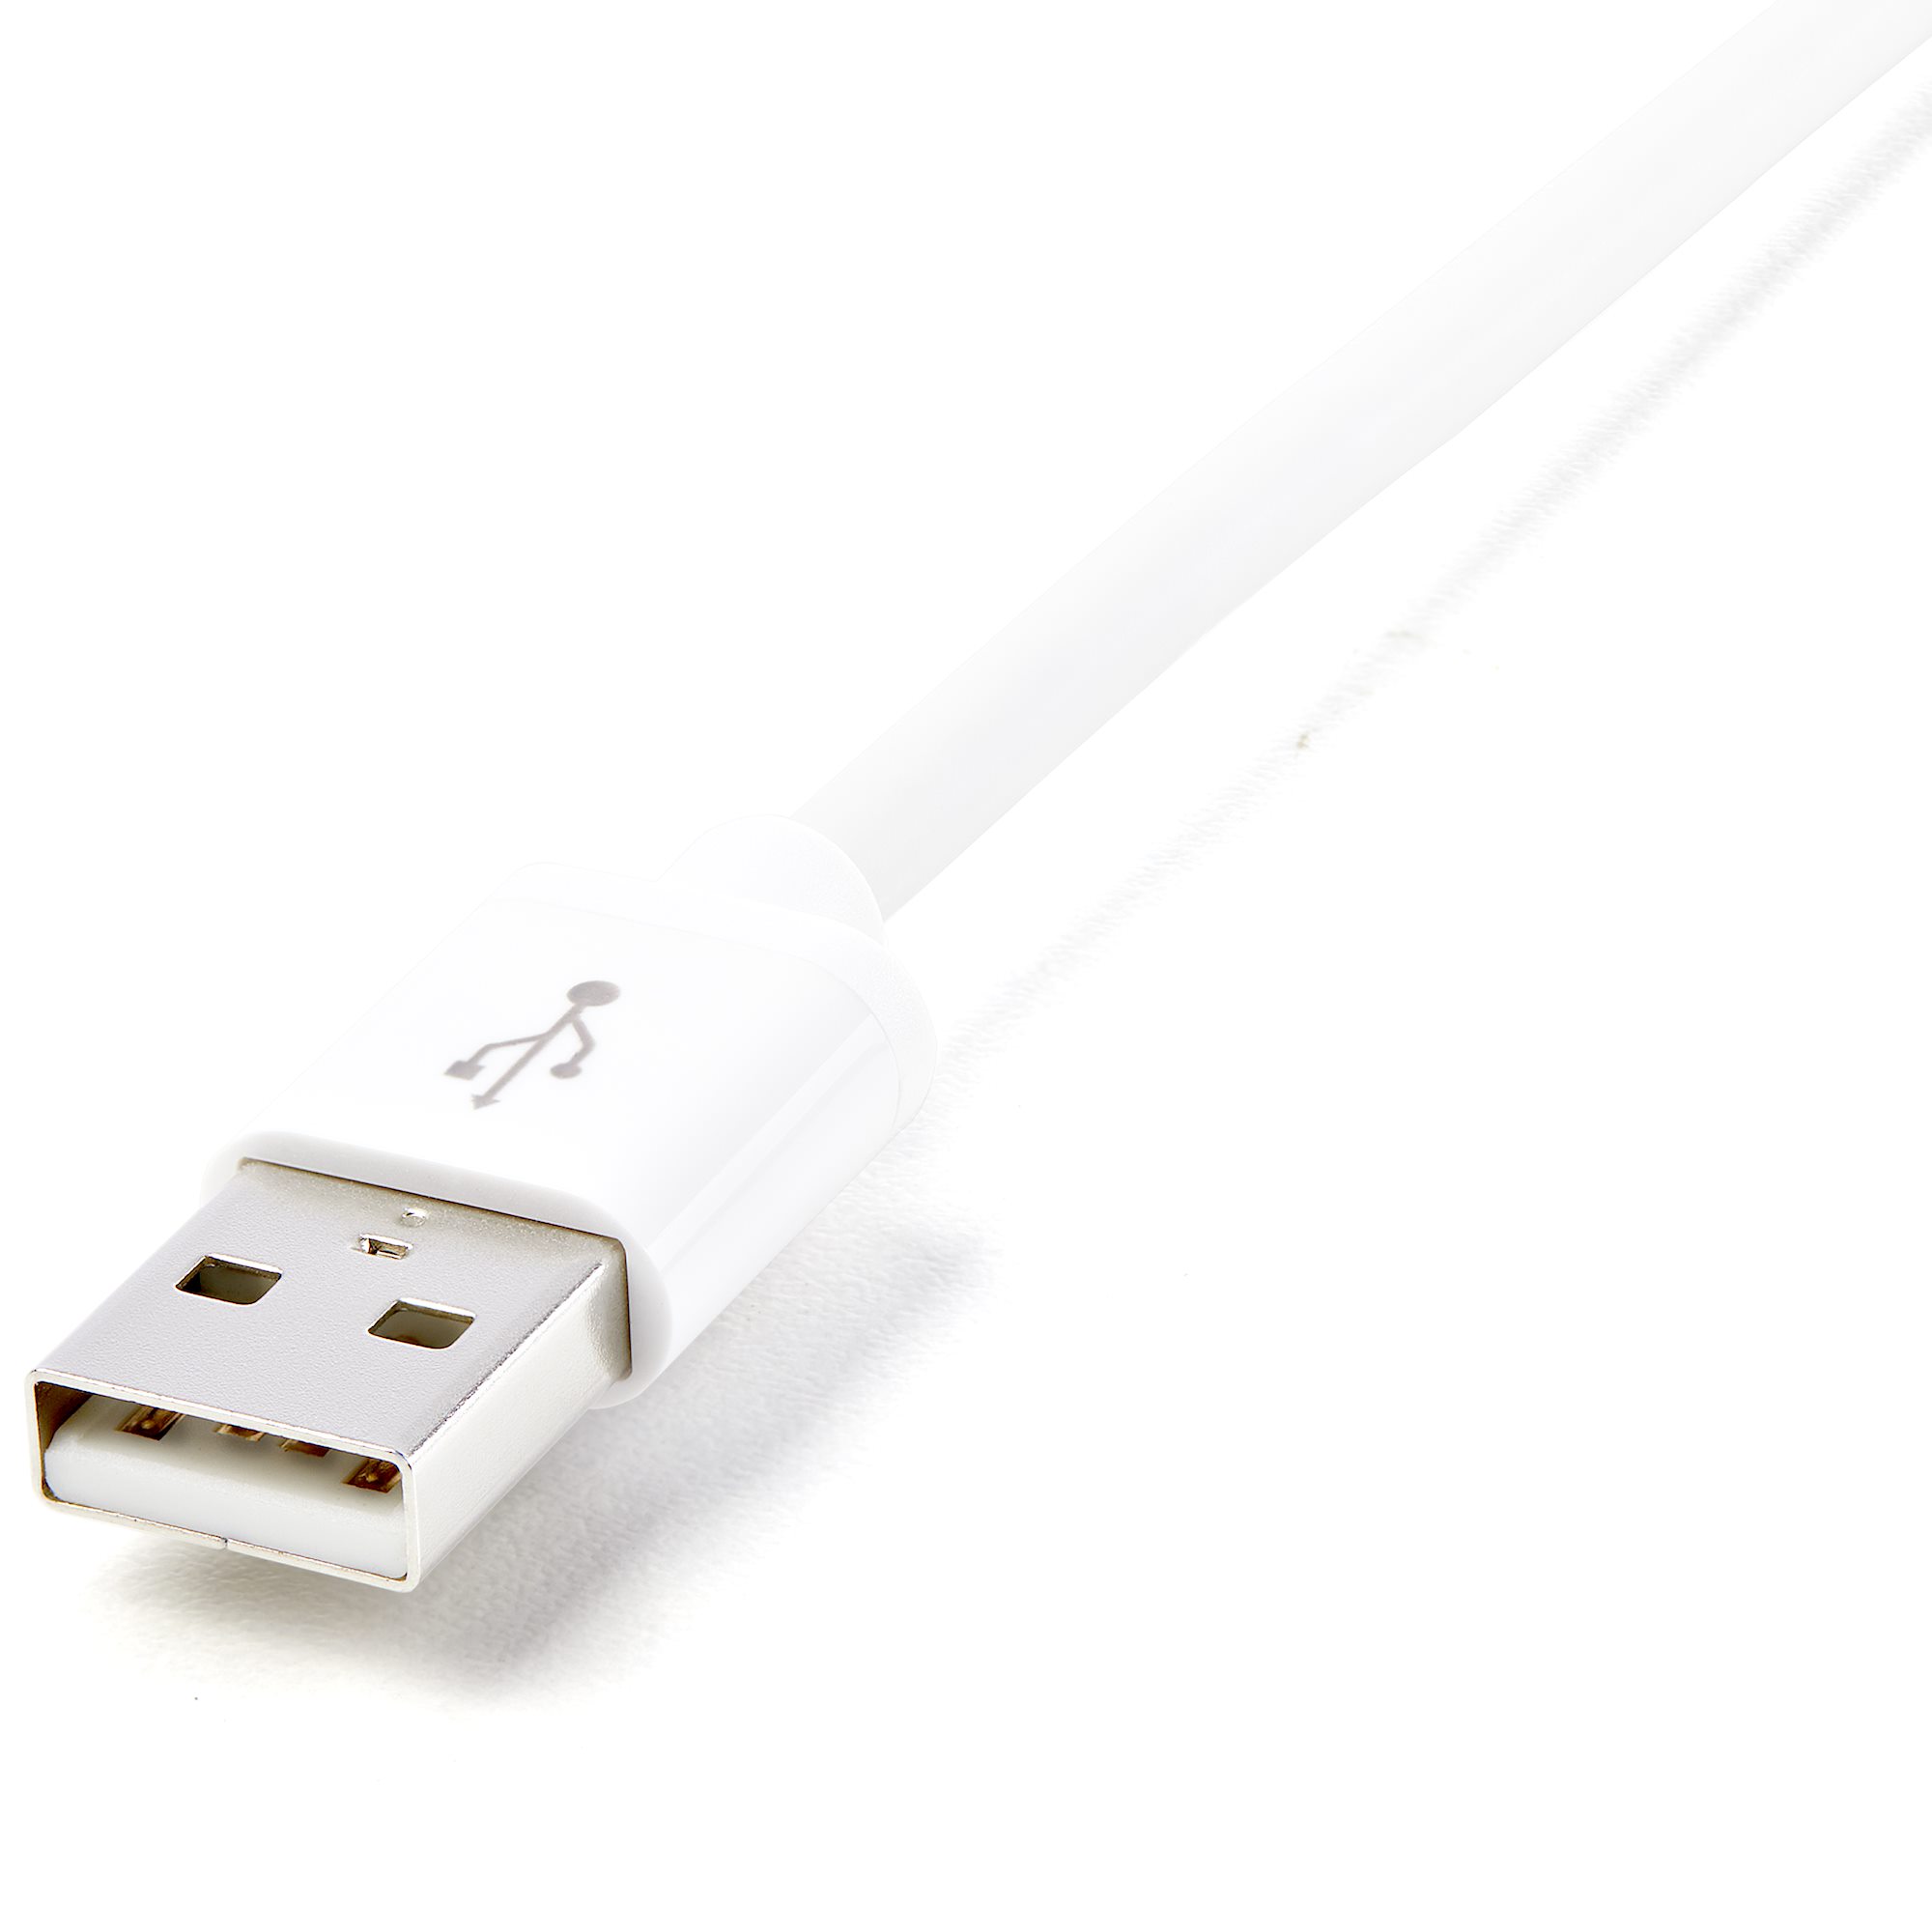 Lightning - USBケーブル 1m ホワイト Apple MFi認証 iPhone/ iPod/ iPad対応